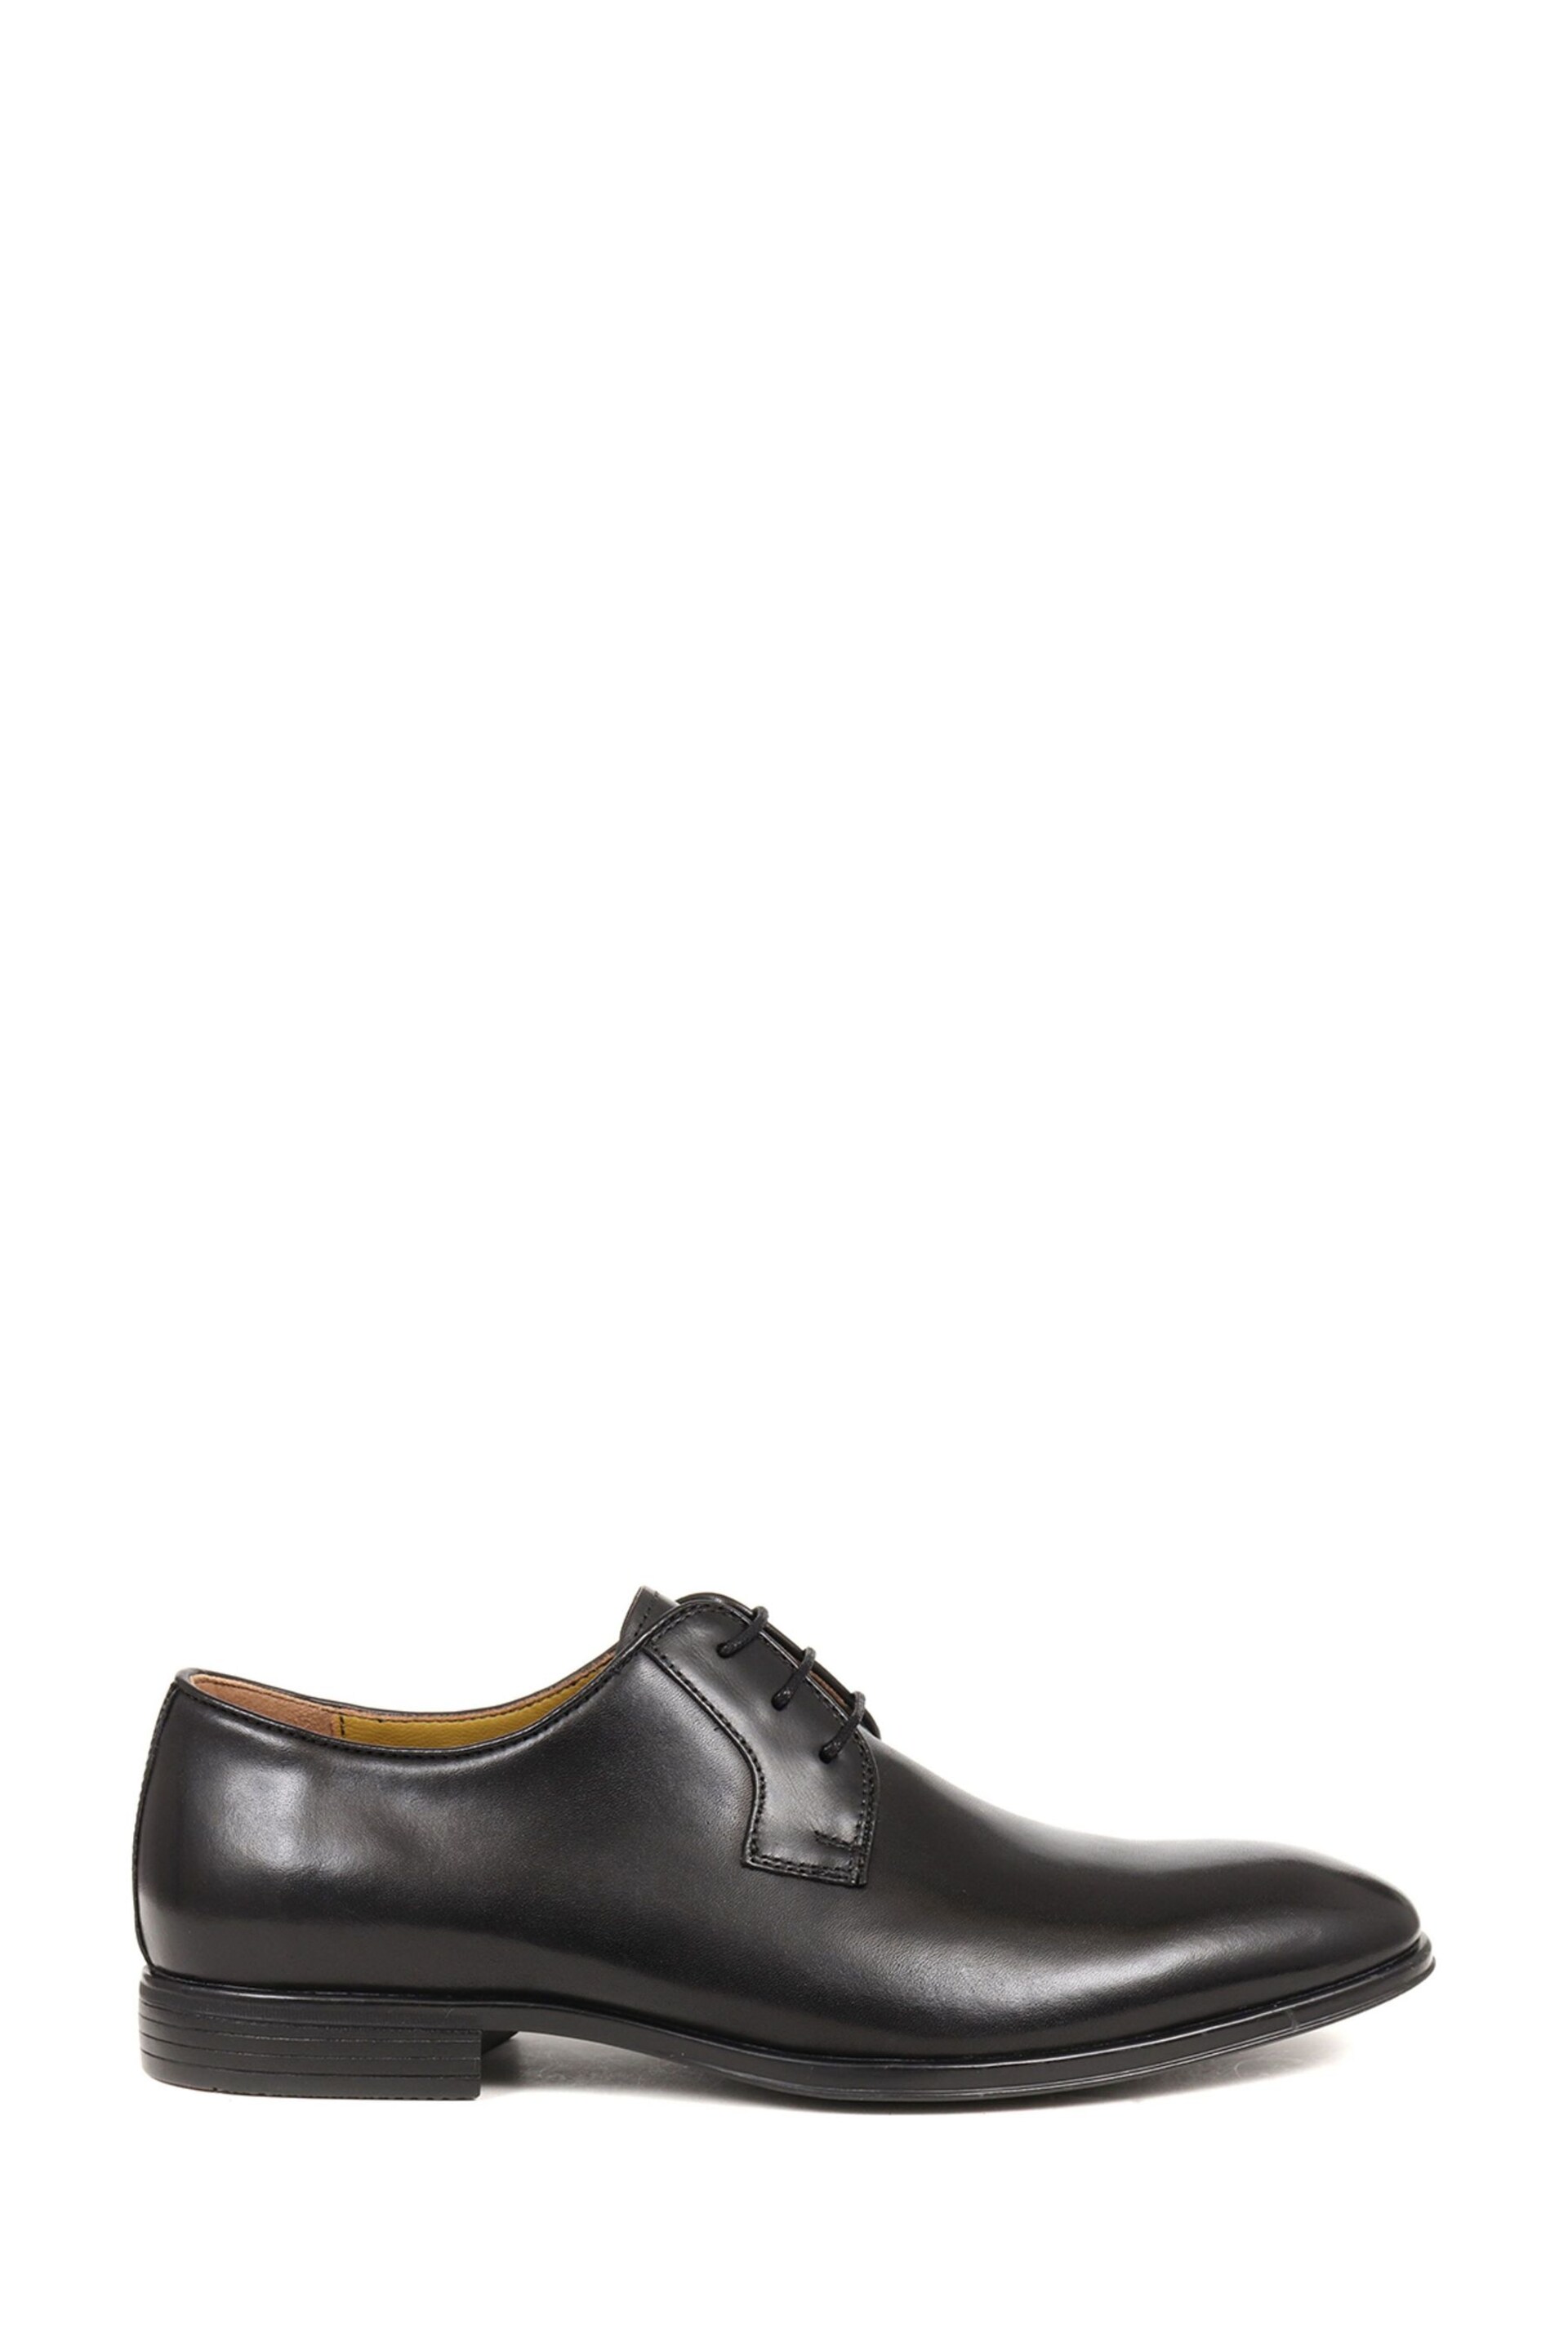 Jones Bootmaker Manchester Leather Derby Black Shoes - Image 1 of 5